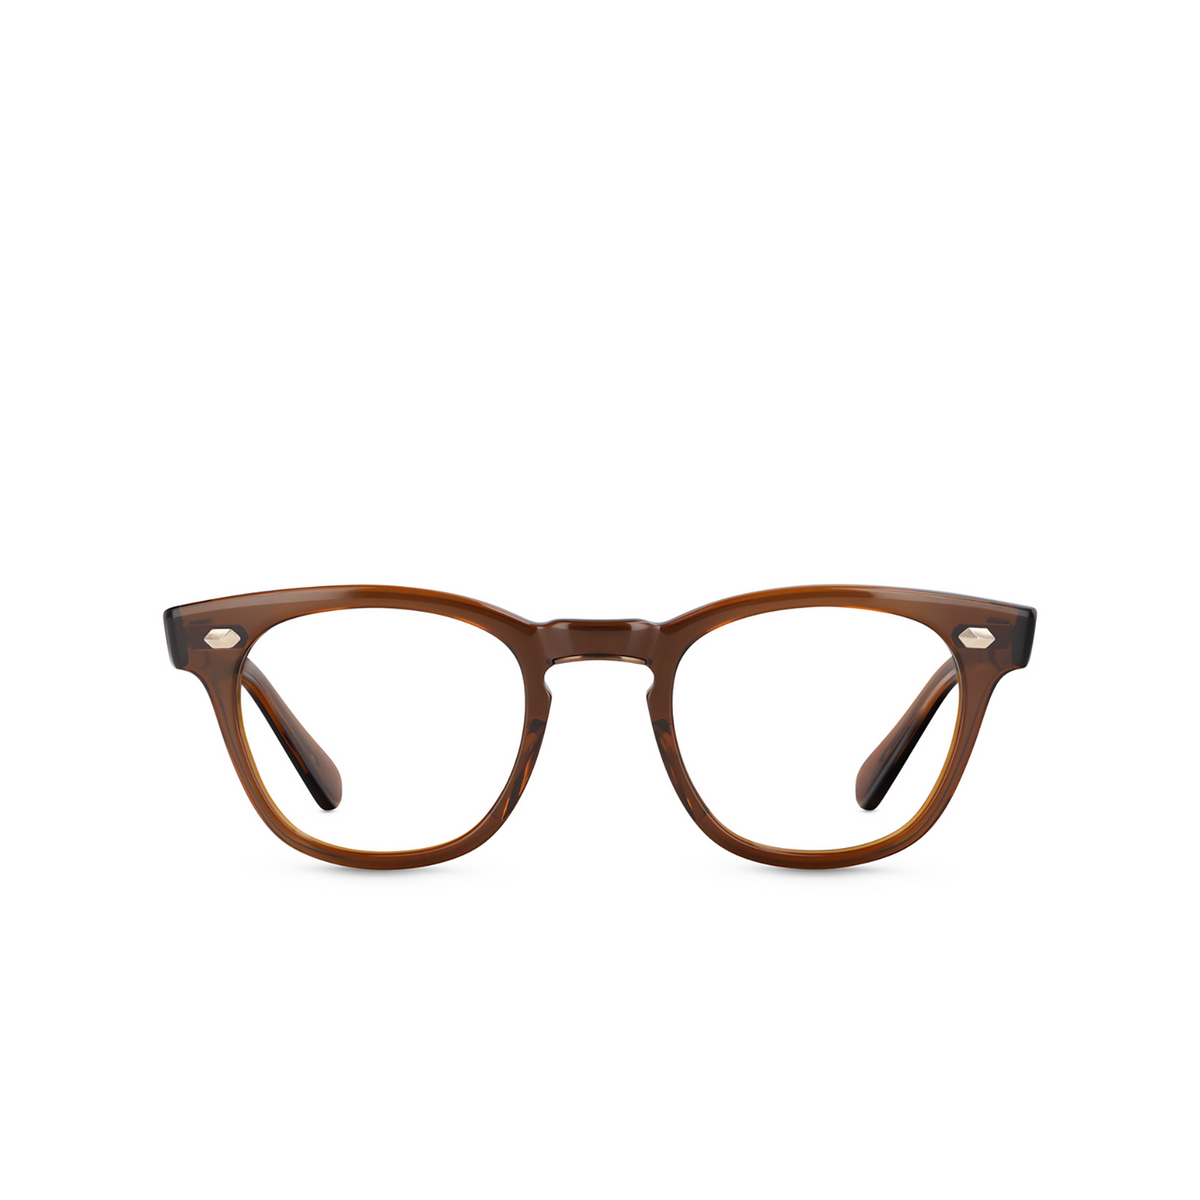 Mr. Leight HANALEI C Eyeglasses CRMLTA-CG Carmelita-Chocolate Gold - front view